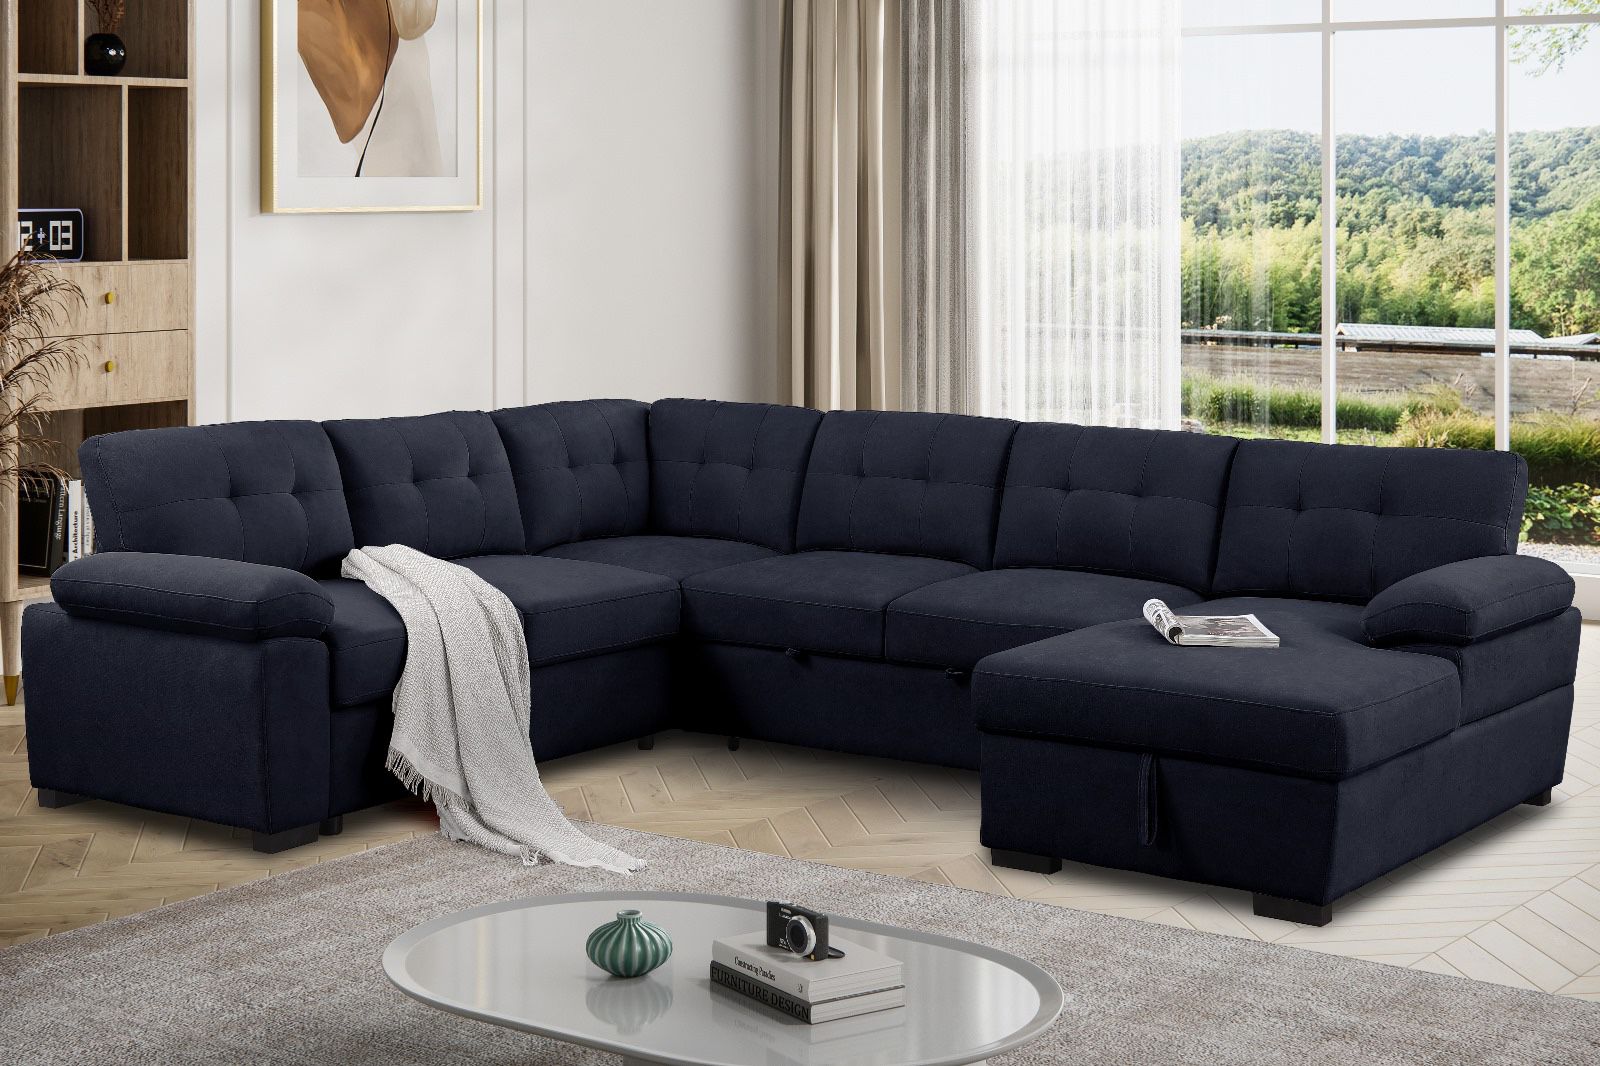 New! Large U-shaped Sectional, Sectional Sofa With Pull Out Bed, Sofabed, Sectional Sofa With Storage Chaise, Sofabed, Sectional, Sectionals, Couch